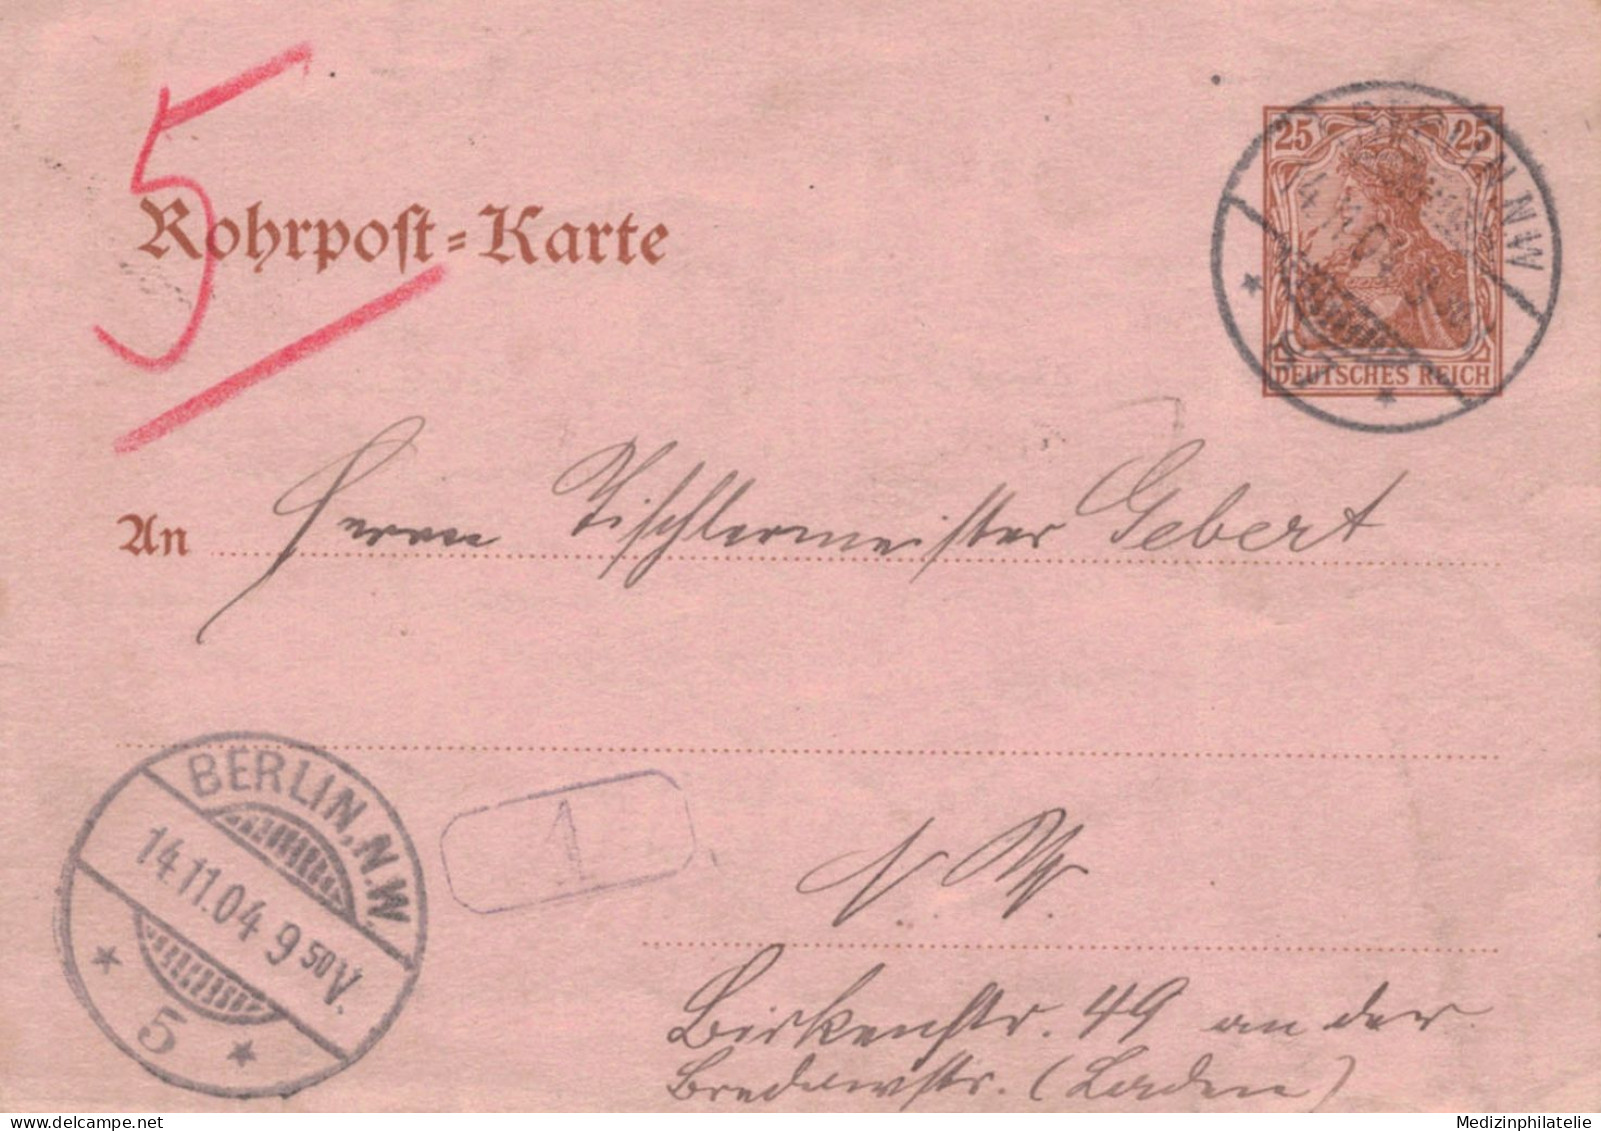 Rohrpost-Karte 25 Pf. Germania - Berlin 87 1904 > 5 09:50 - Tarjetas